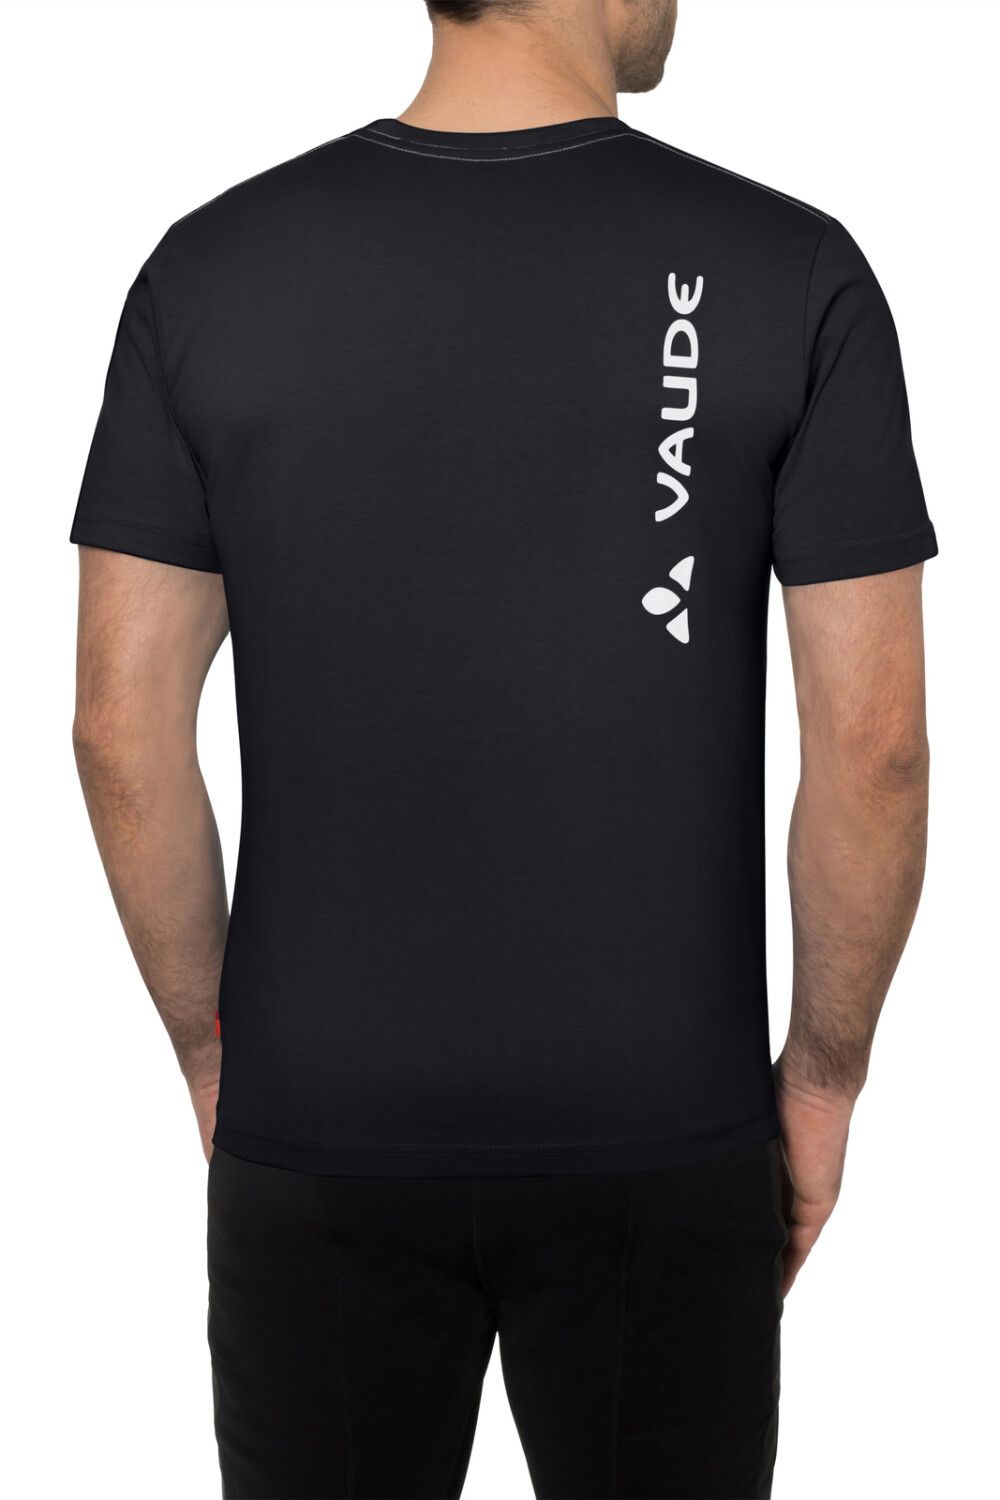 VAUDE Men's Brand T-Shirt (Bild 6)